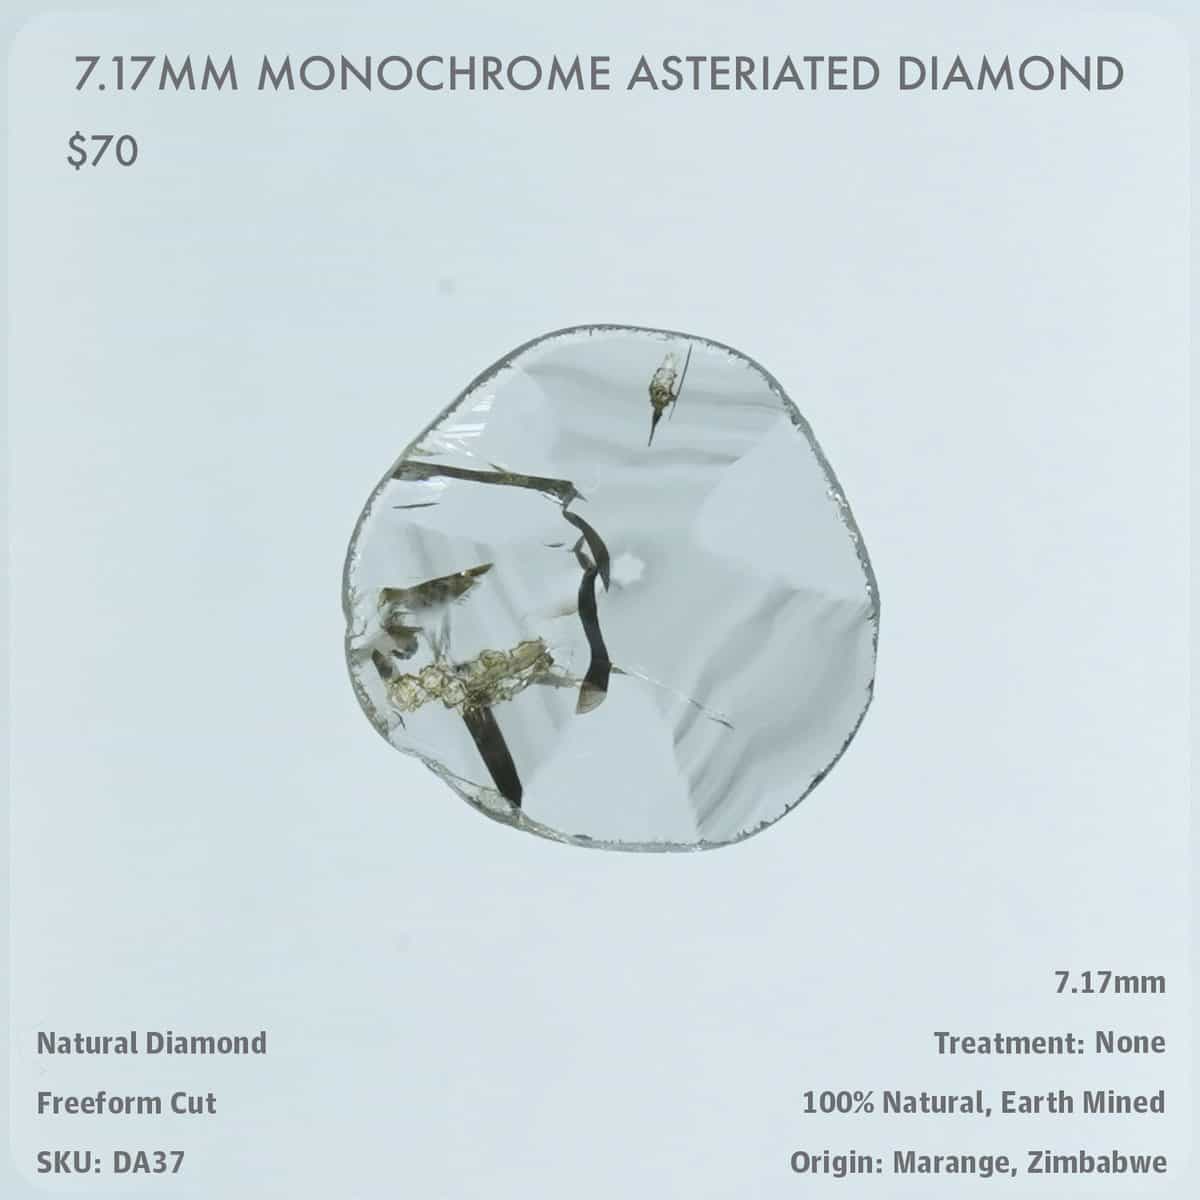 7.17mm Monochrome Asteriated Diamond